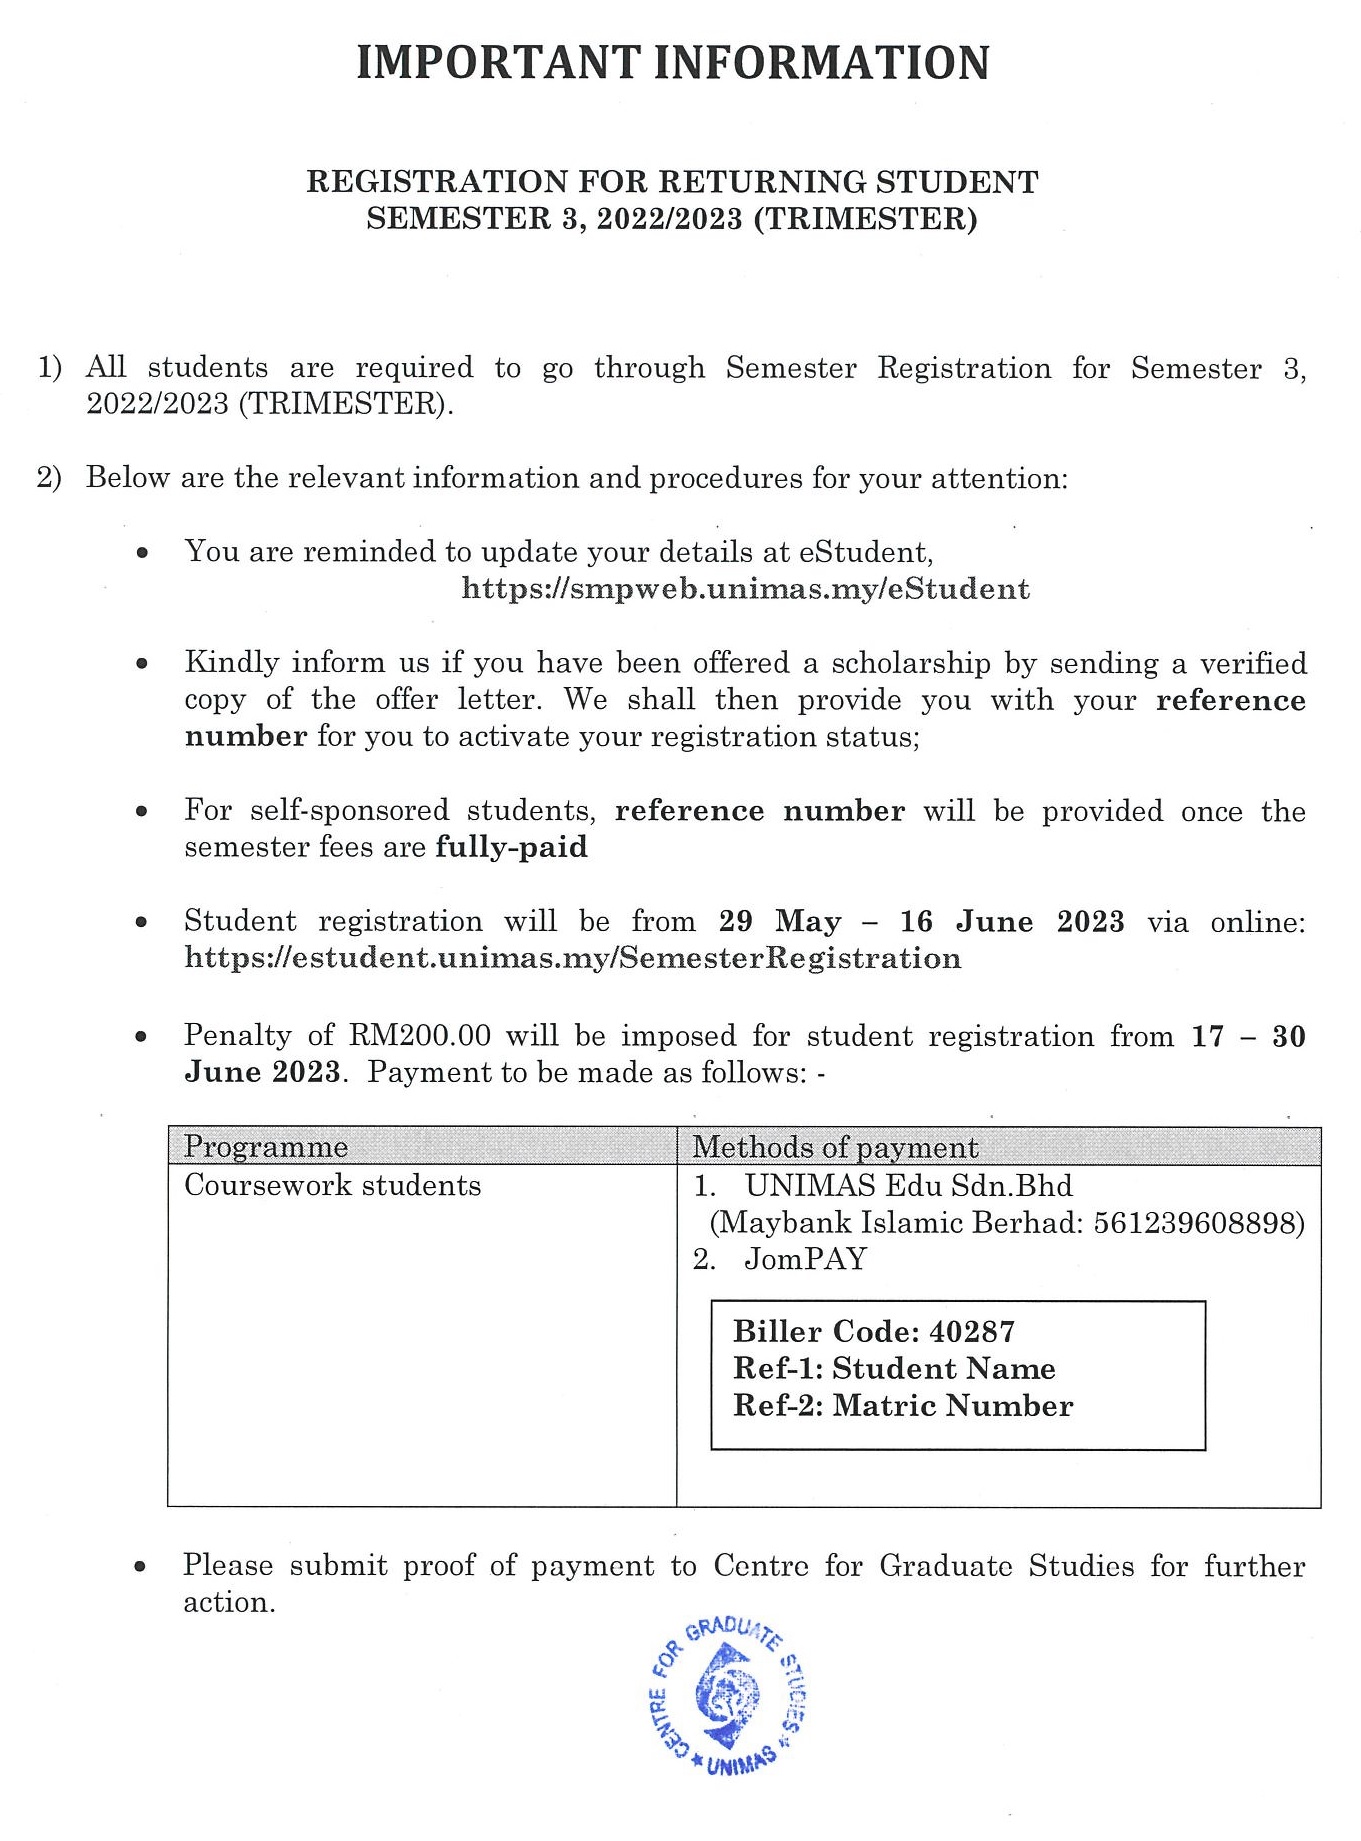 registration returning student trimester sem3 2022_2023.jpg